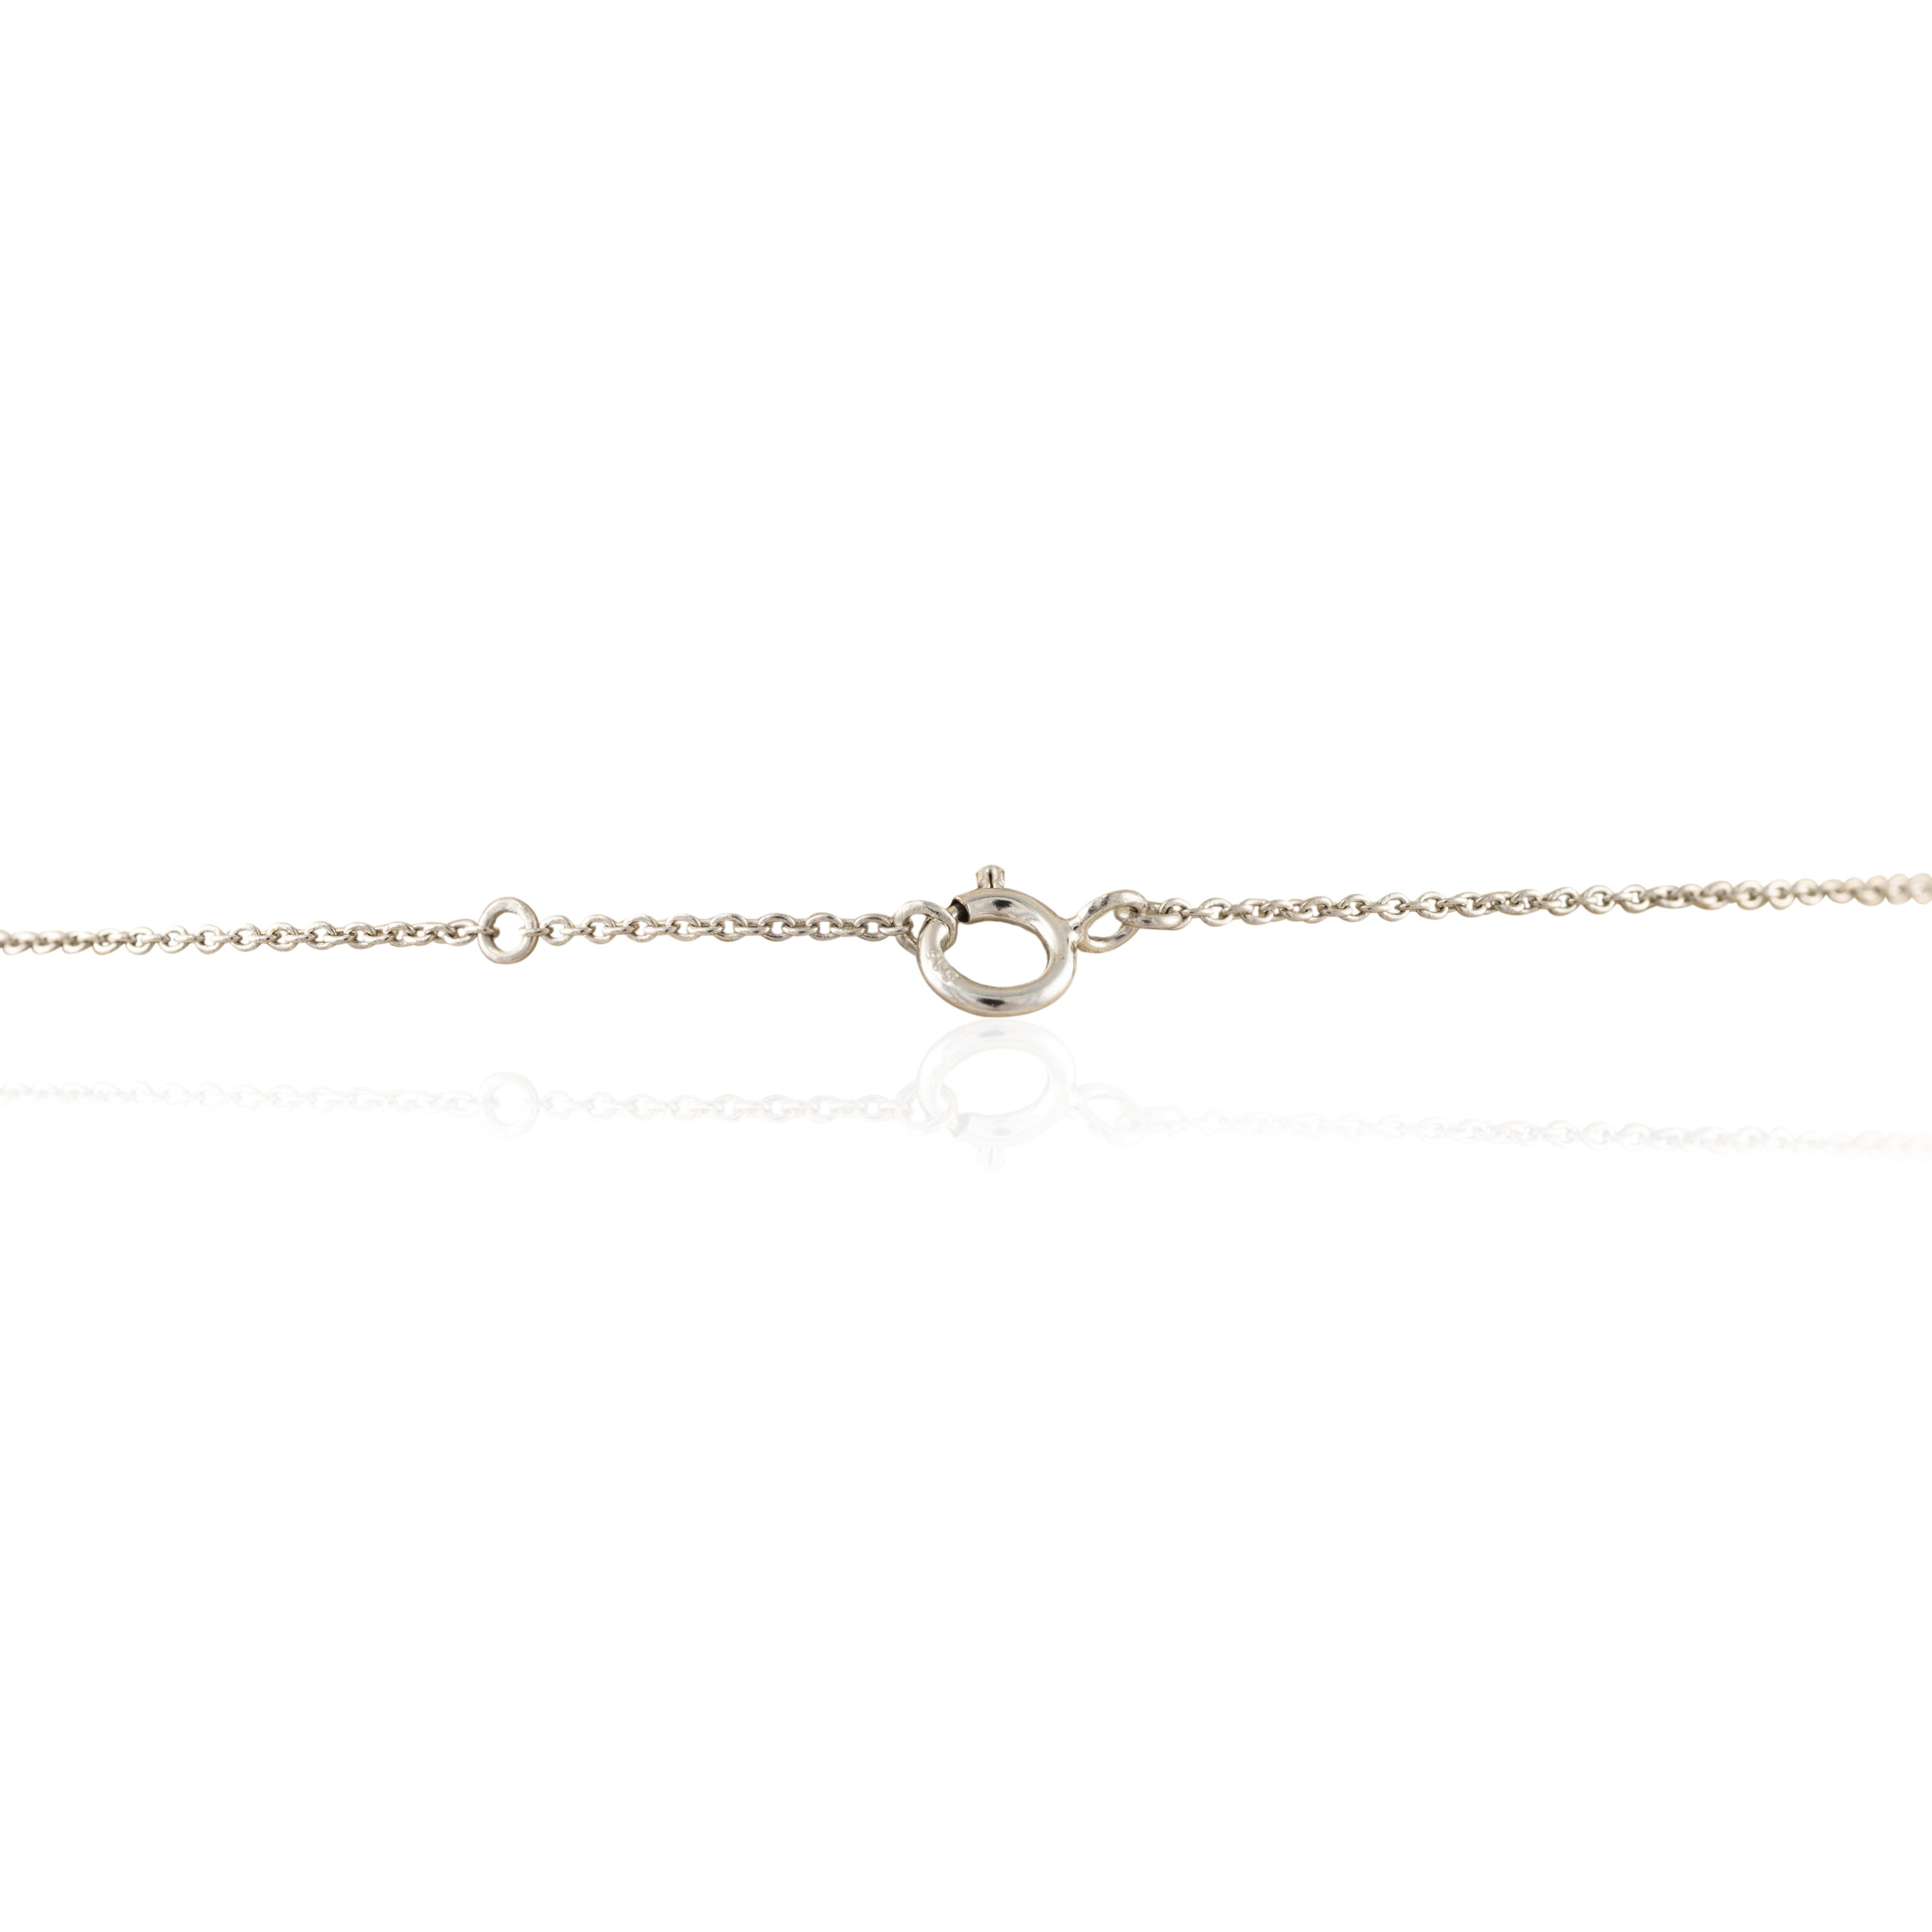  Statement Tanzanite Diamond Chain Necklace 18k White Gold, Bridesmaid Gift For Sale 1